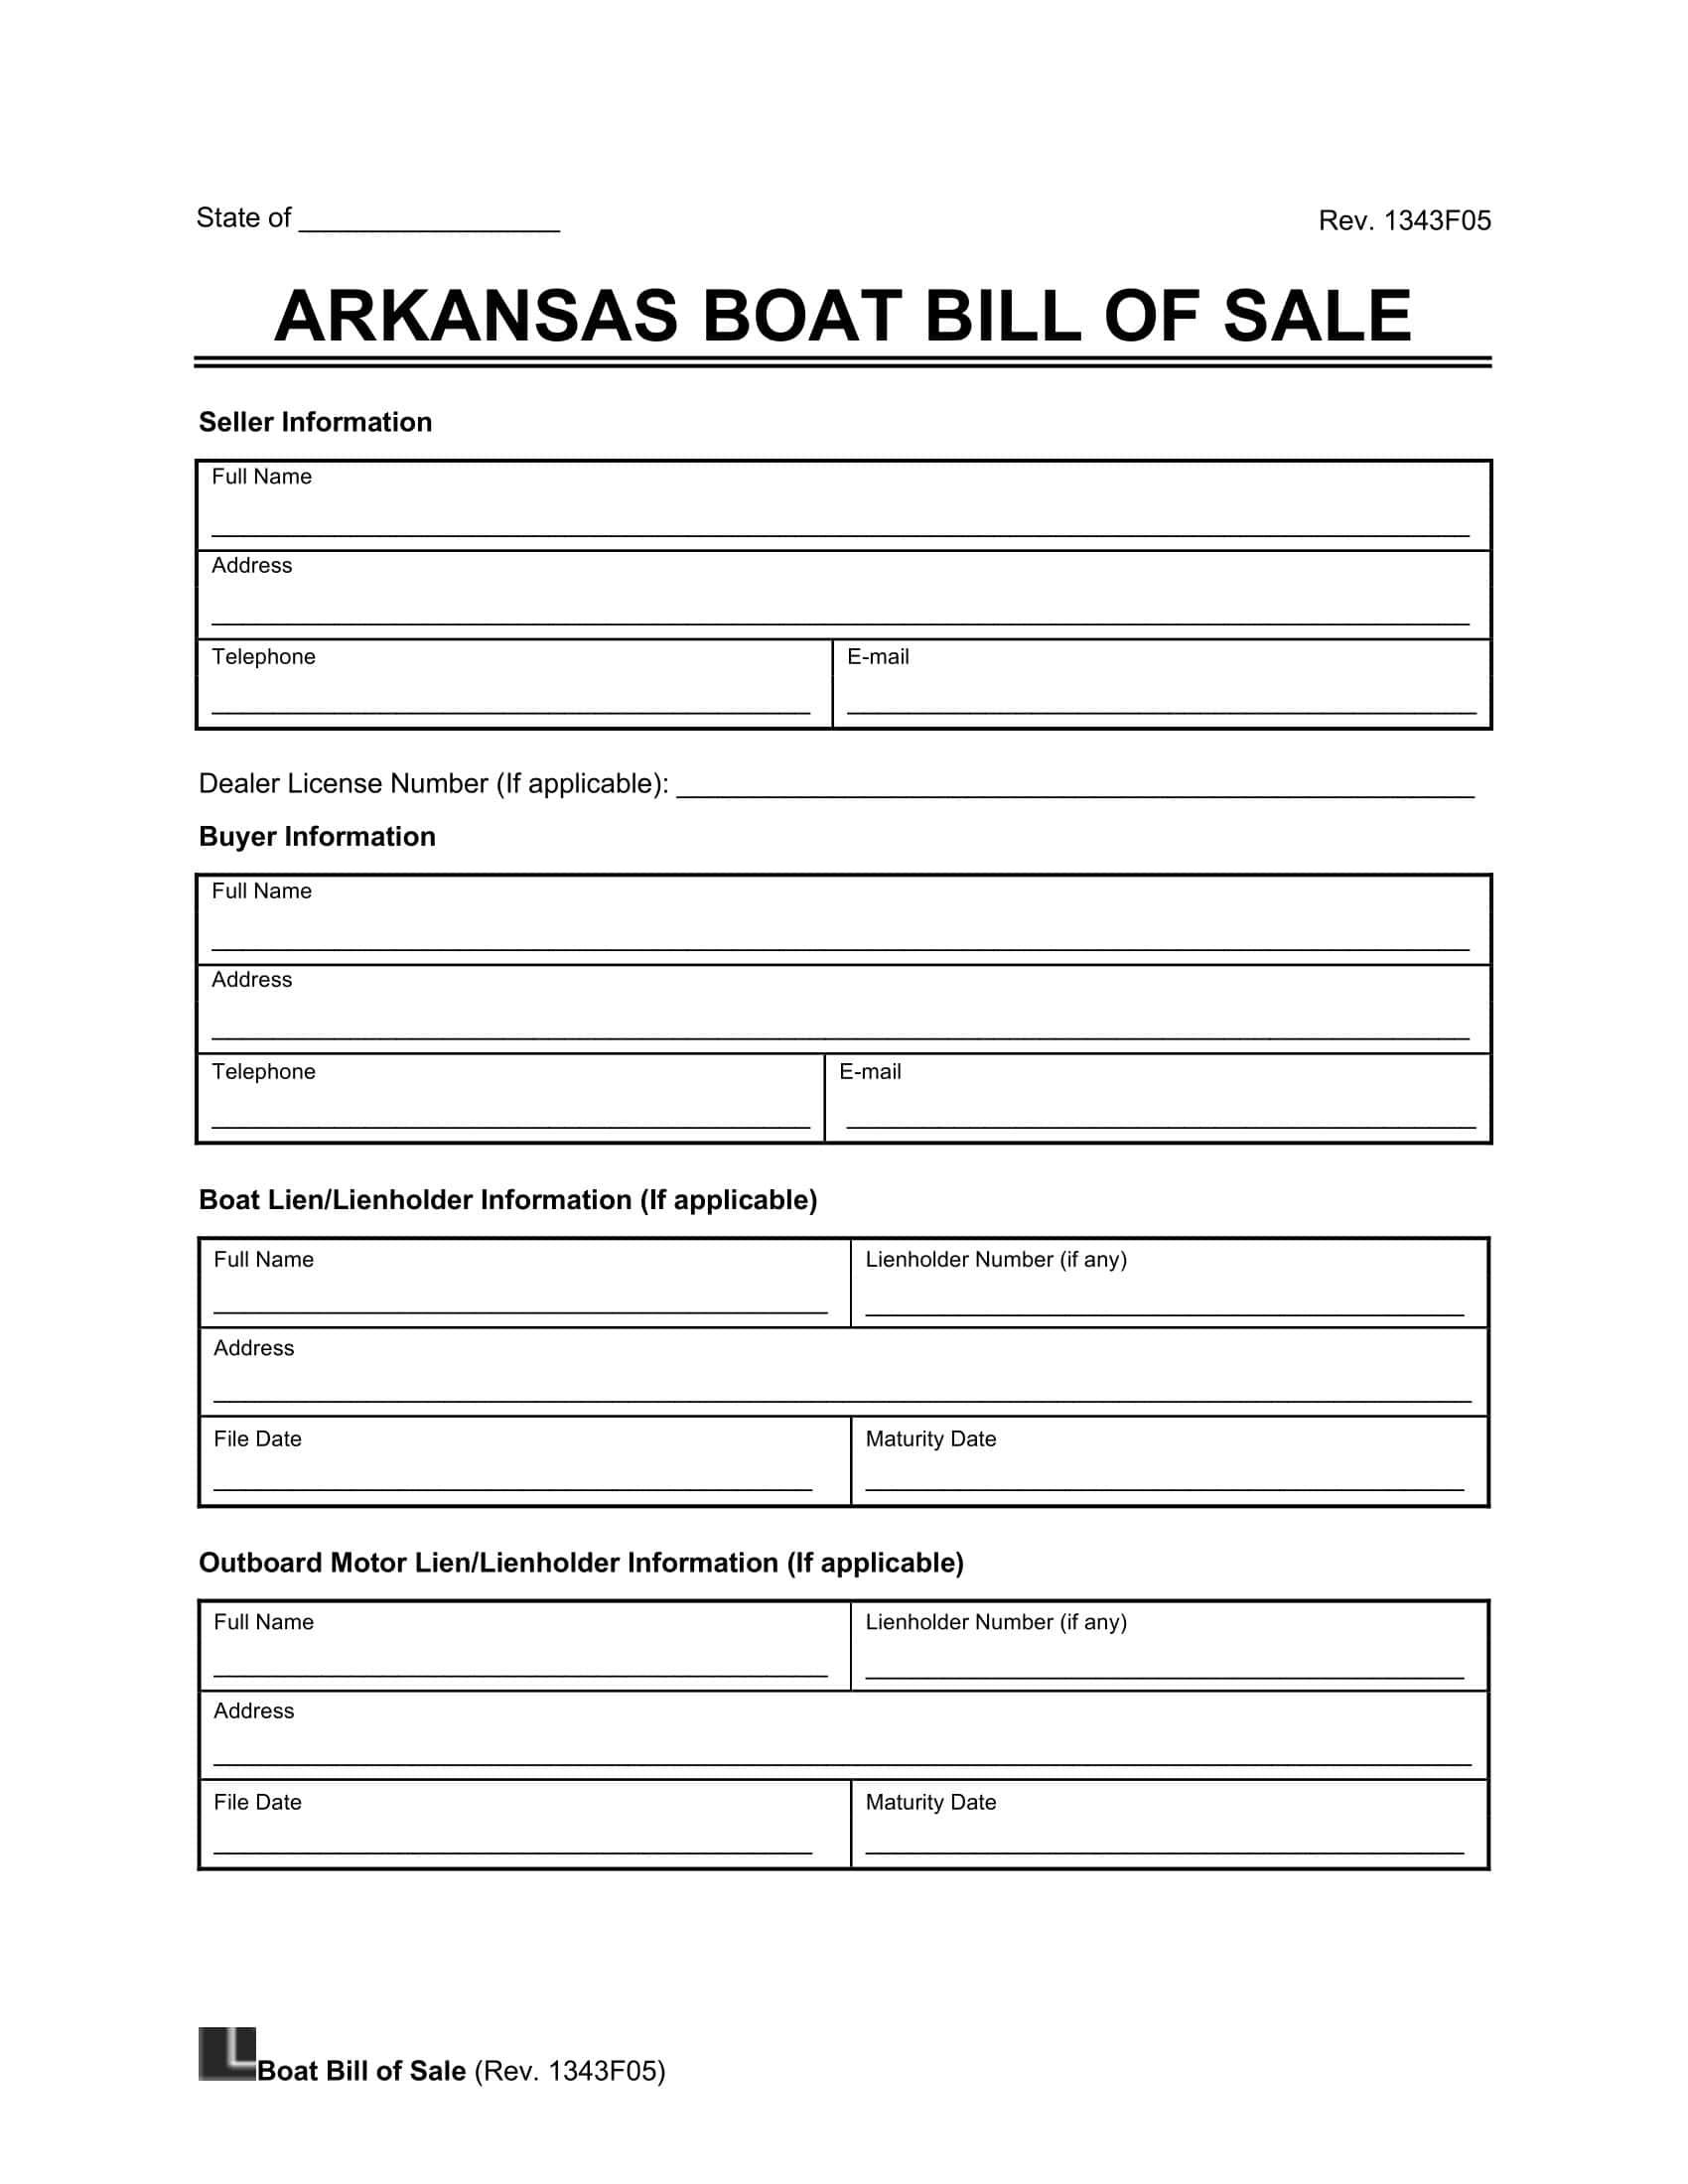 Arkansas boat bill of sale screenshot